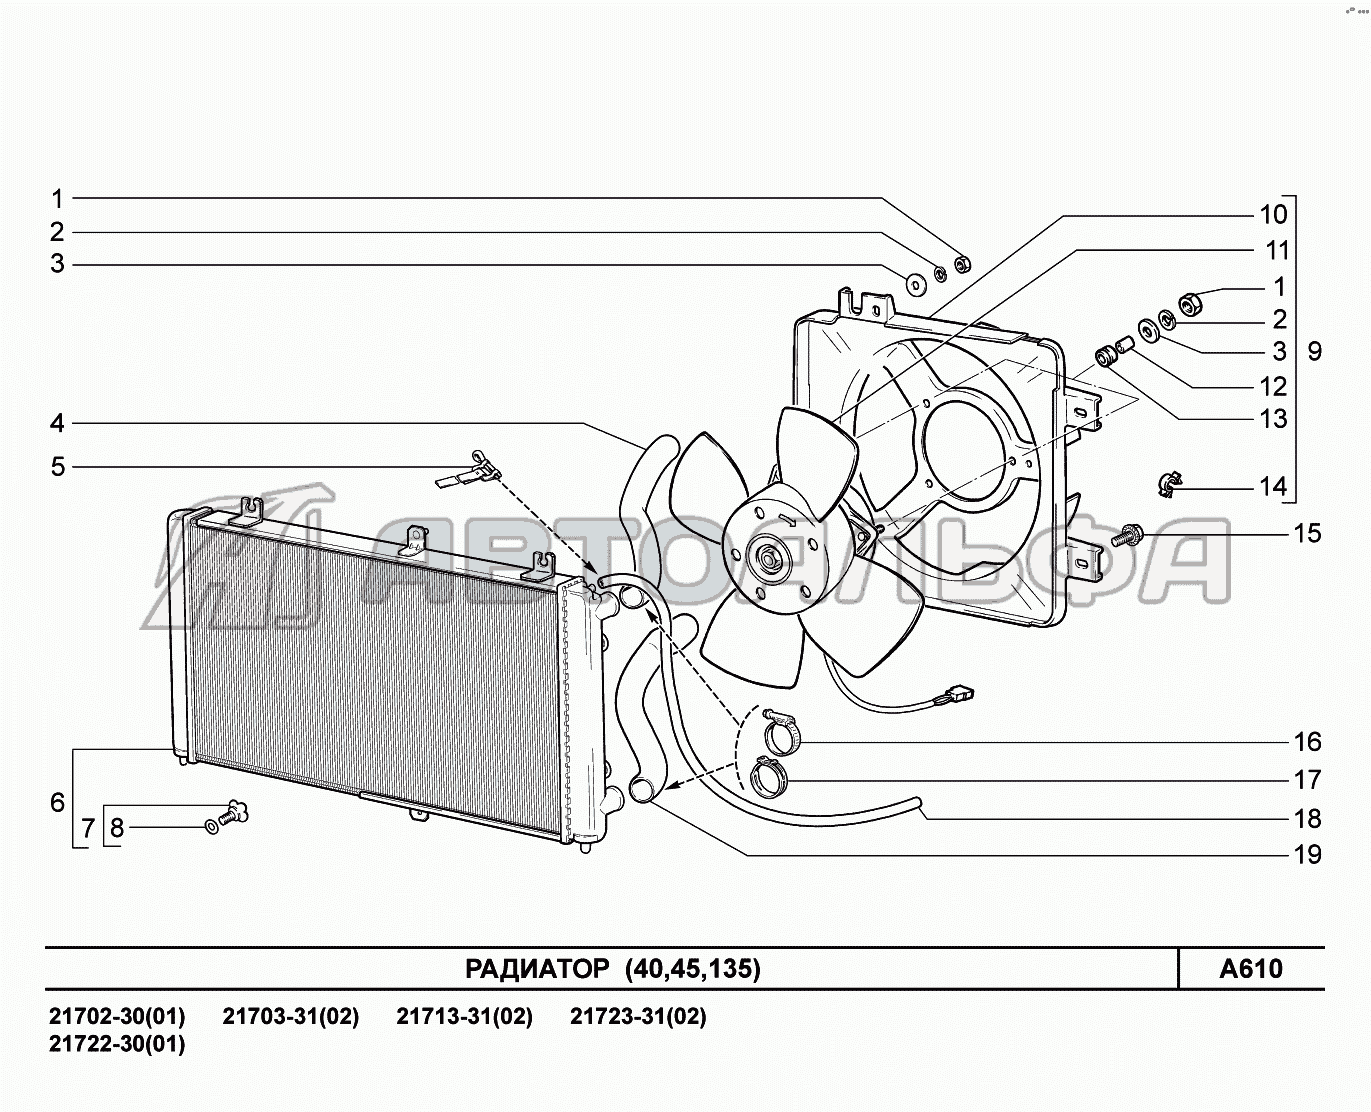 A610. Радиатор LADA Priora FL (ВАЗ 2170), каталог 2013 г.